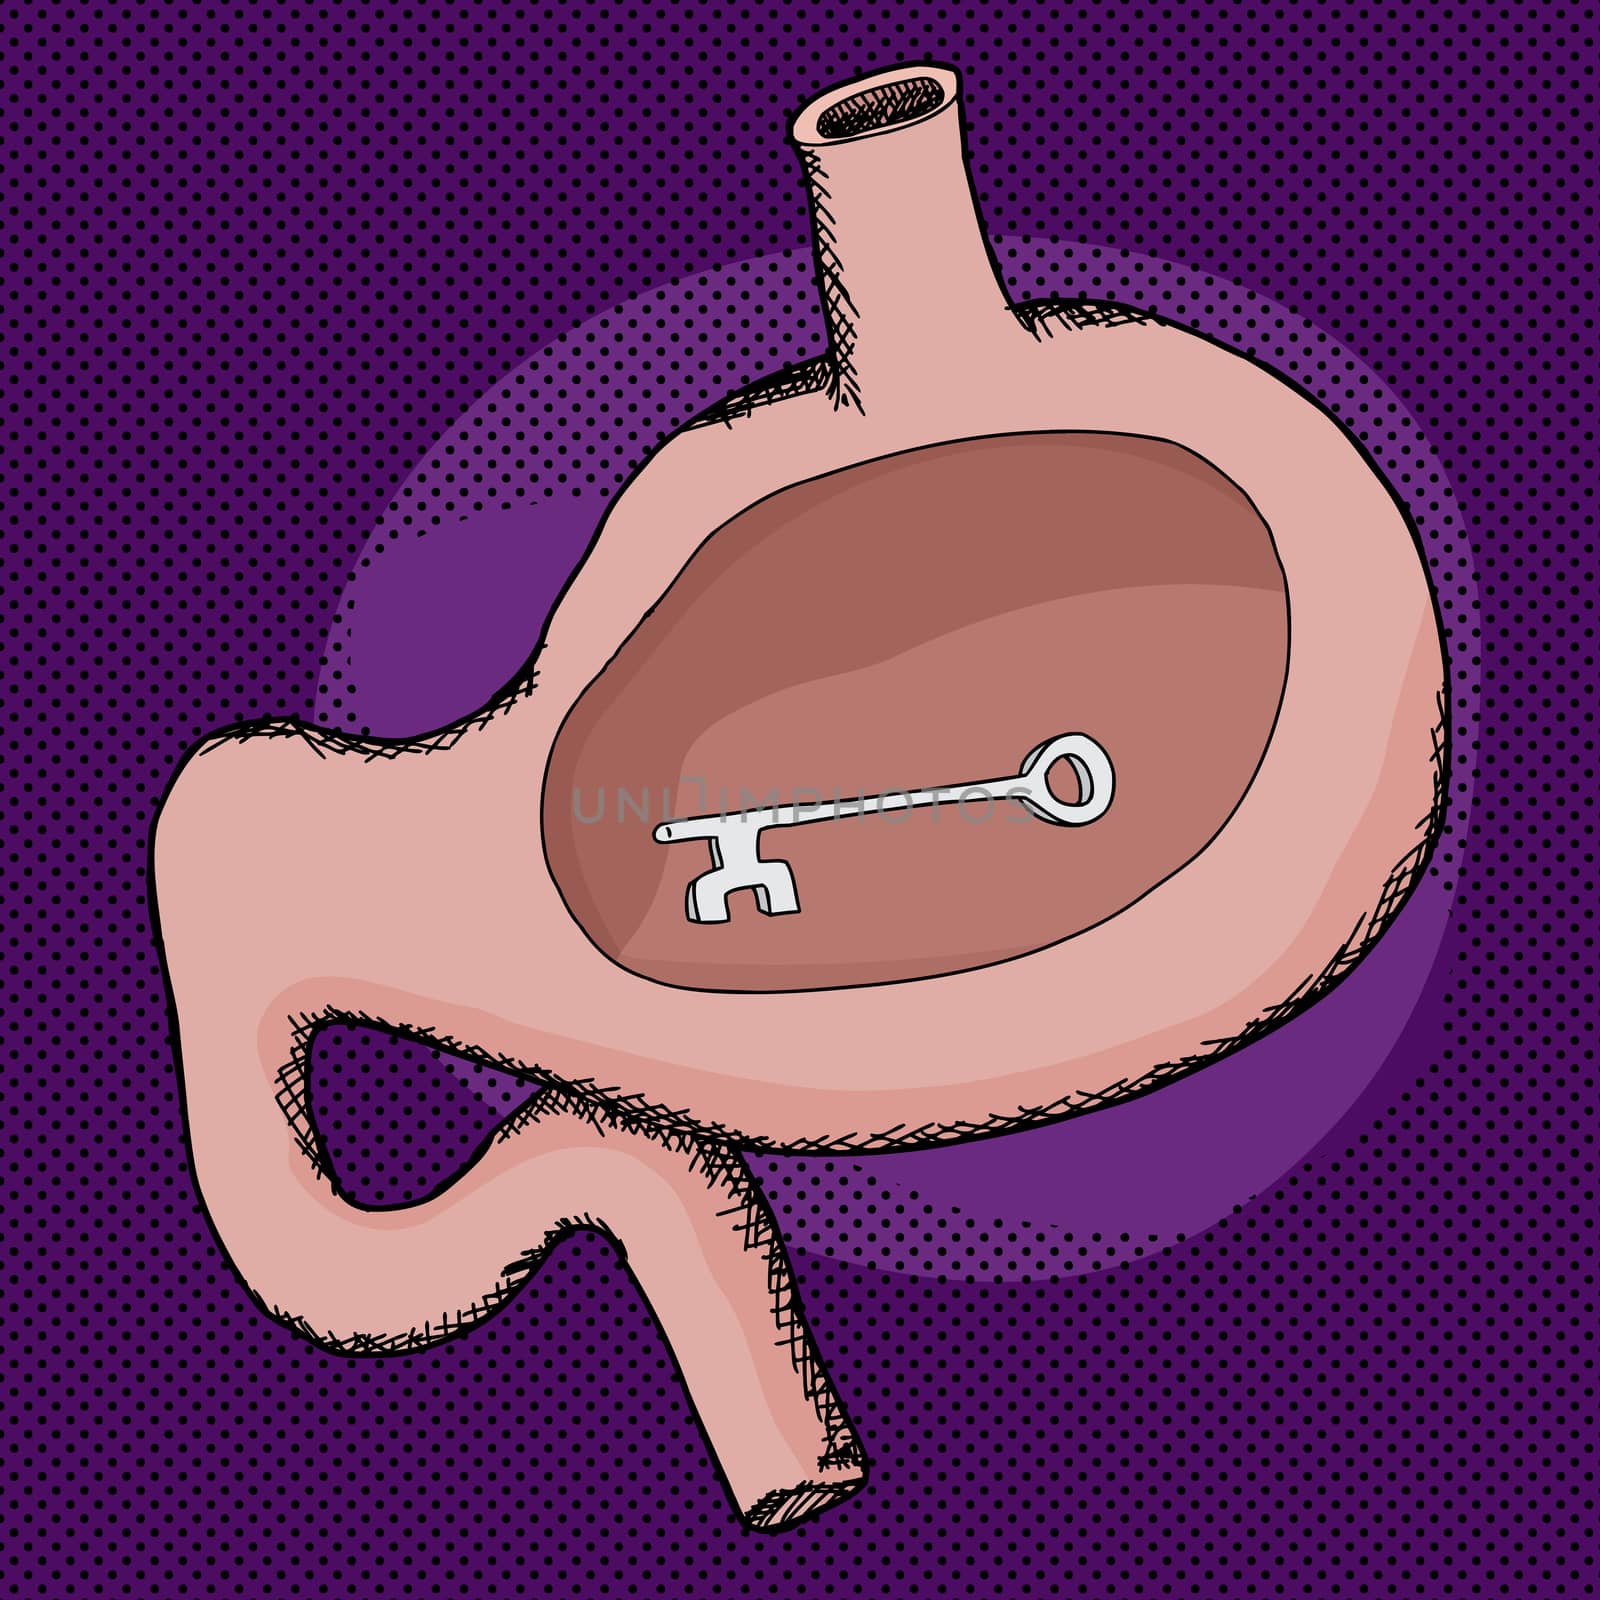 Skeleton key inside human stomach over purple background